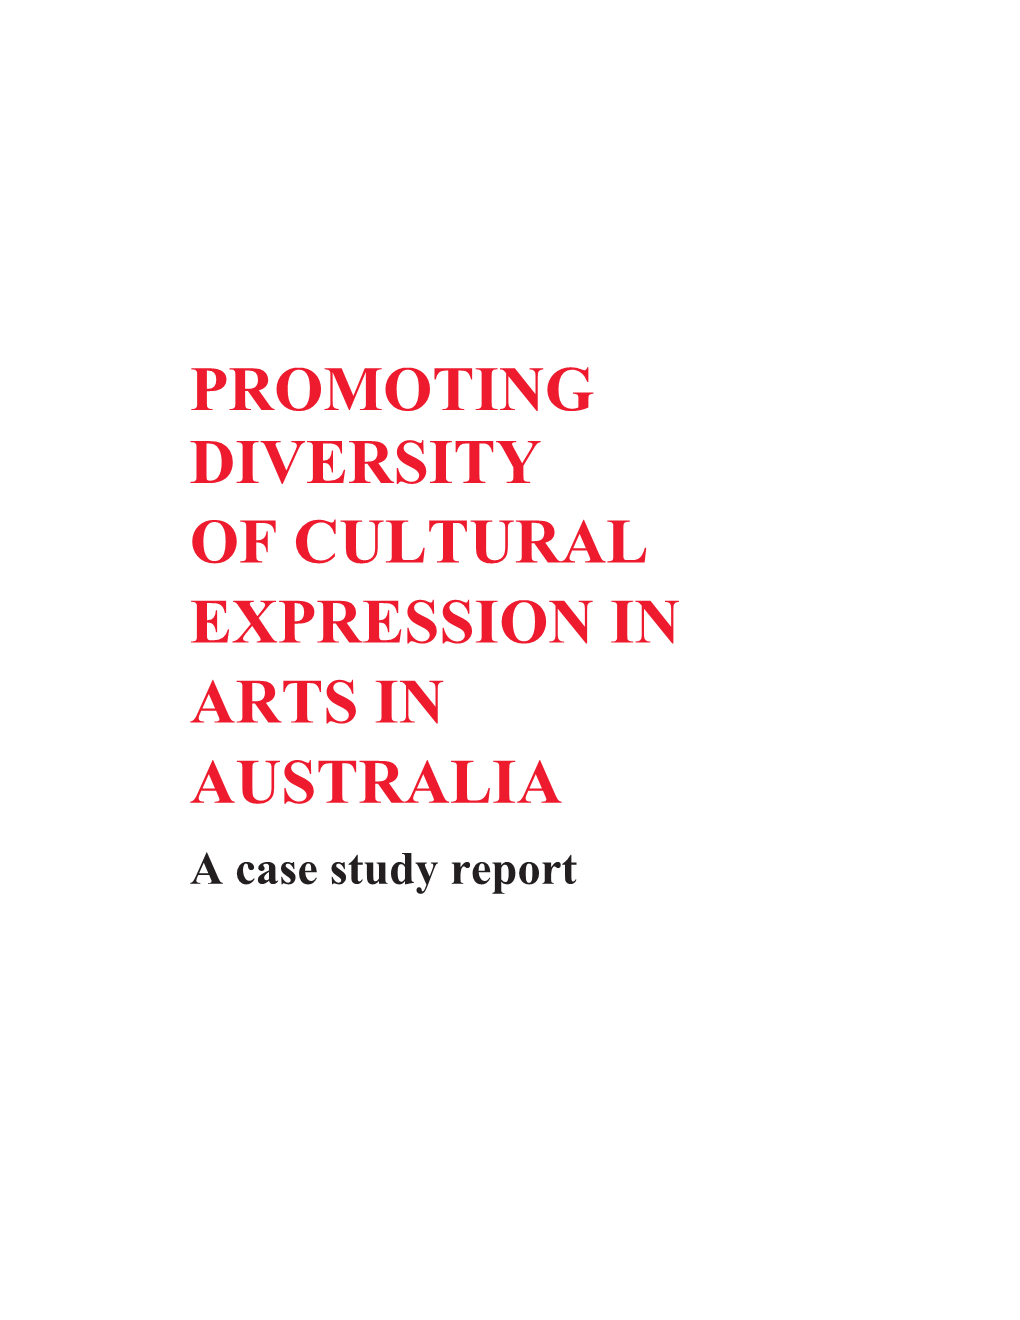 Of Cultural Expression in Arts in Australia